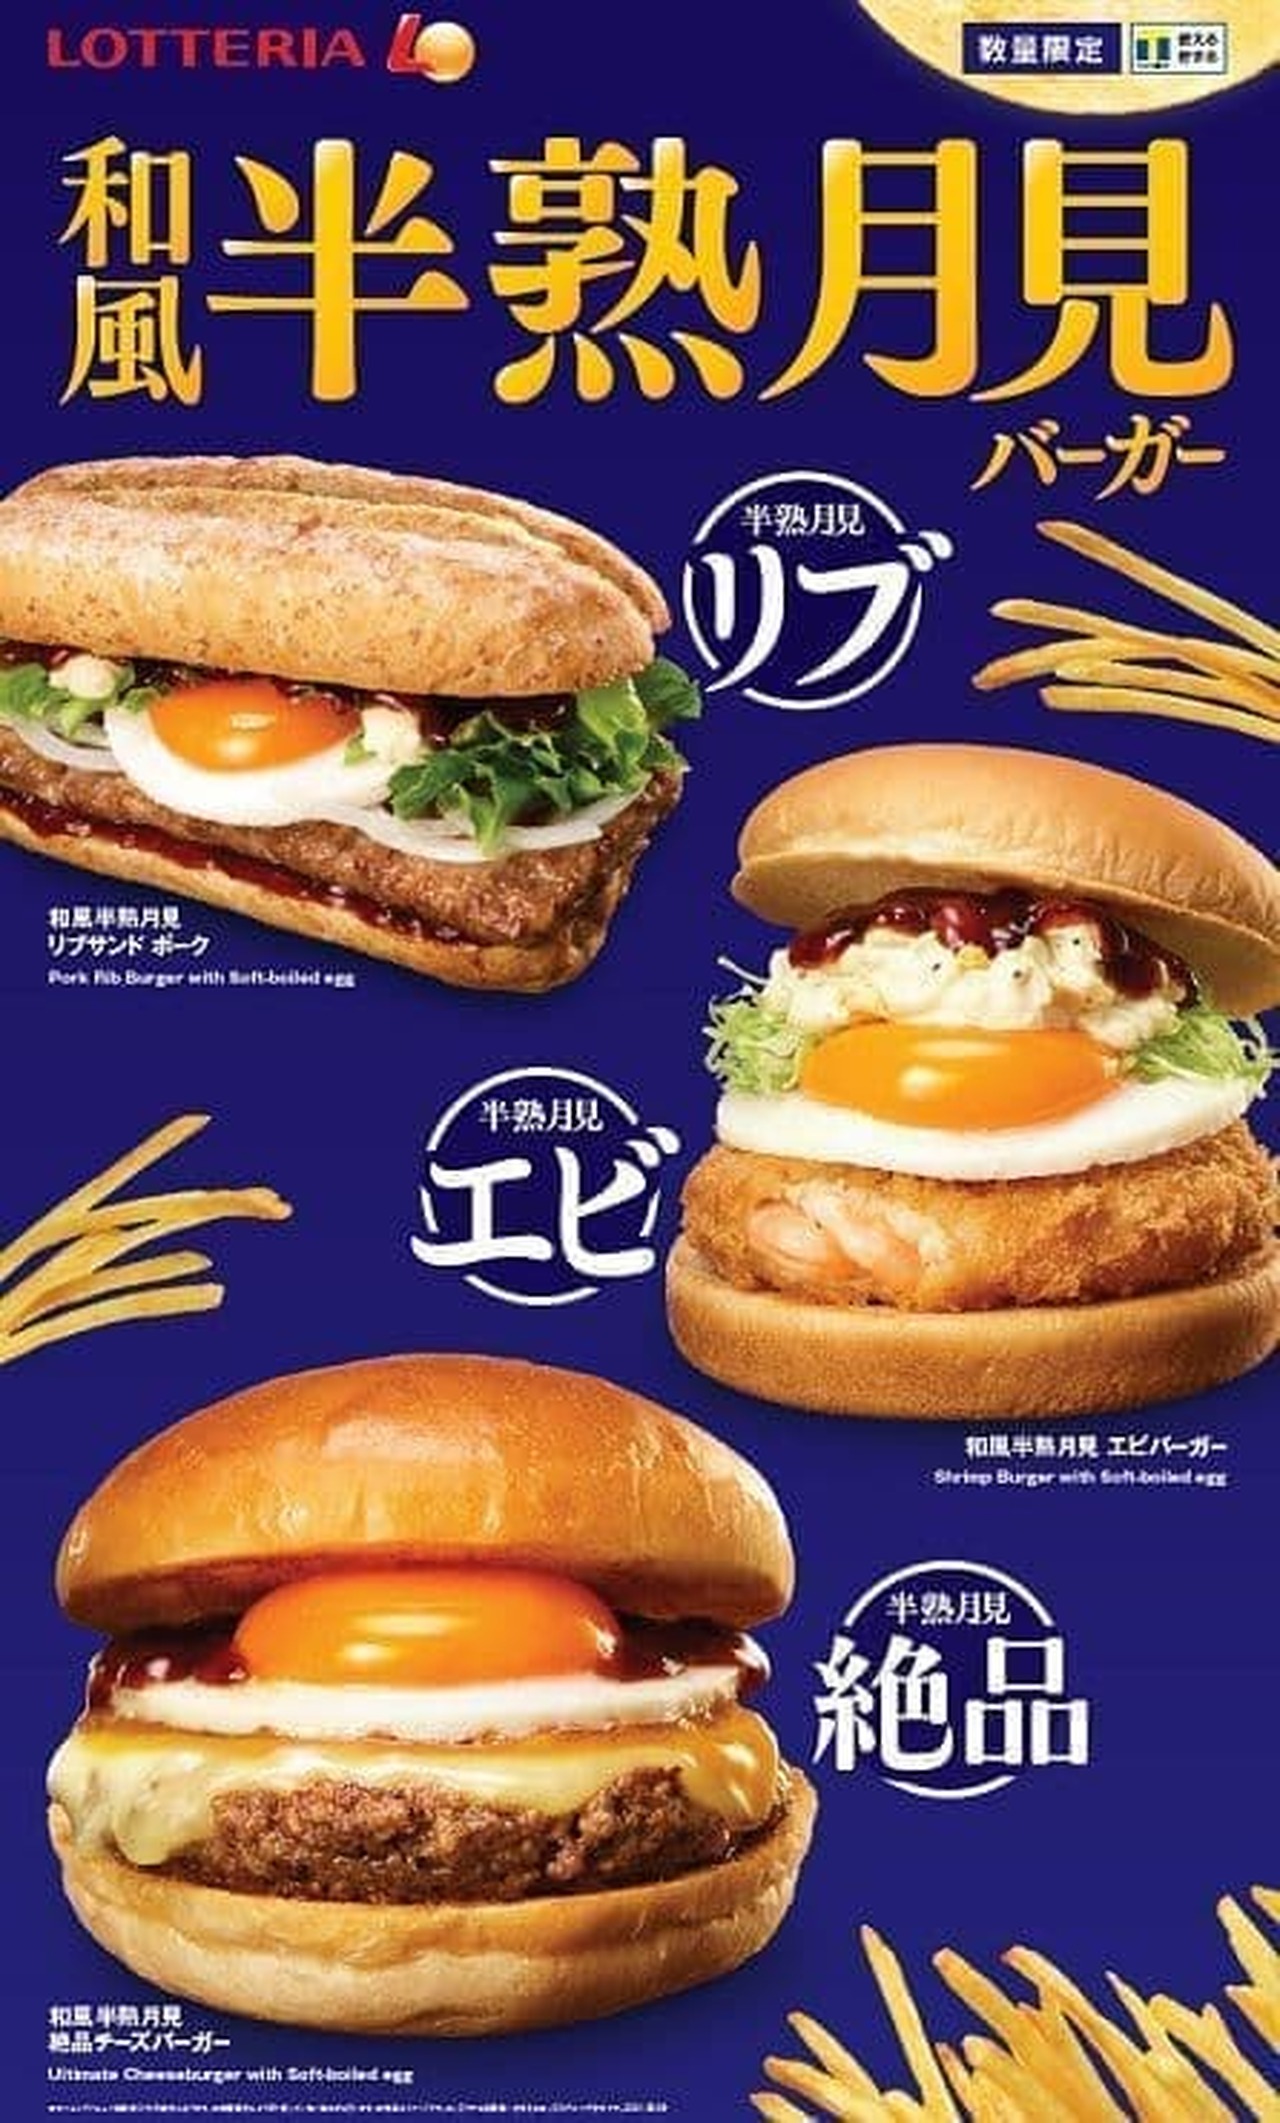 Lotteria "Japanese-style half-ripe moon-viewing exquisite cheeseburger" "Japanese-style half-ripe moon-viewing shrimp burger" "Japanese-style half-ripe moon-viewing rib sand pork"